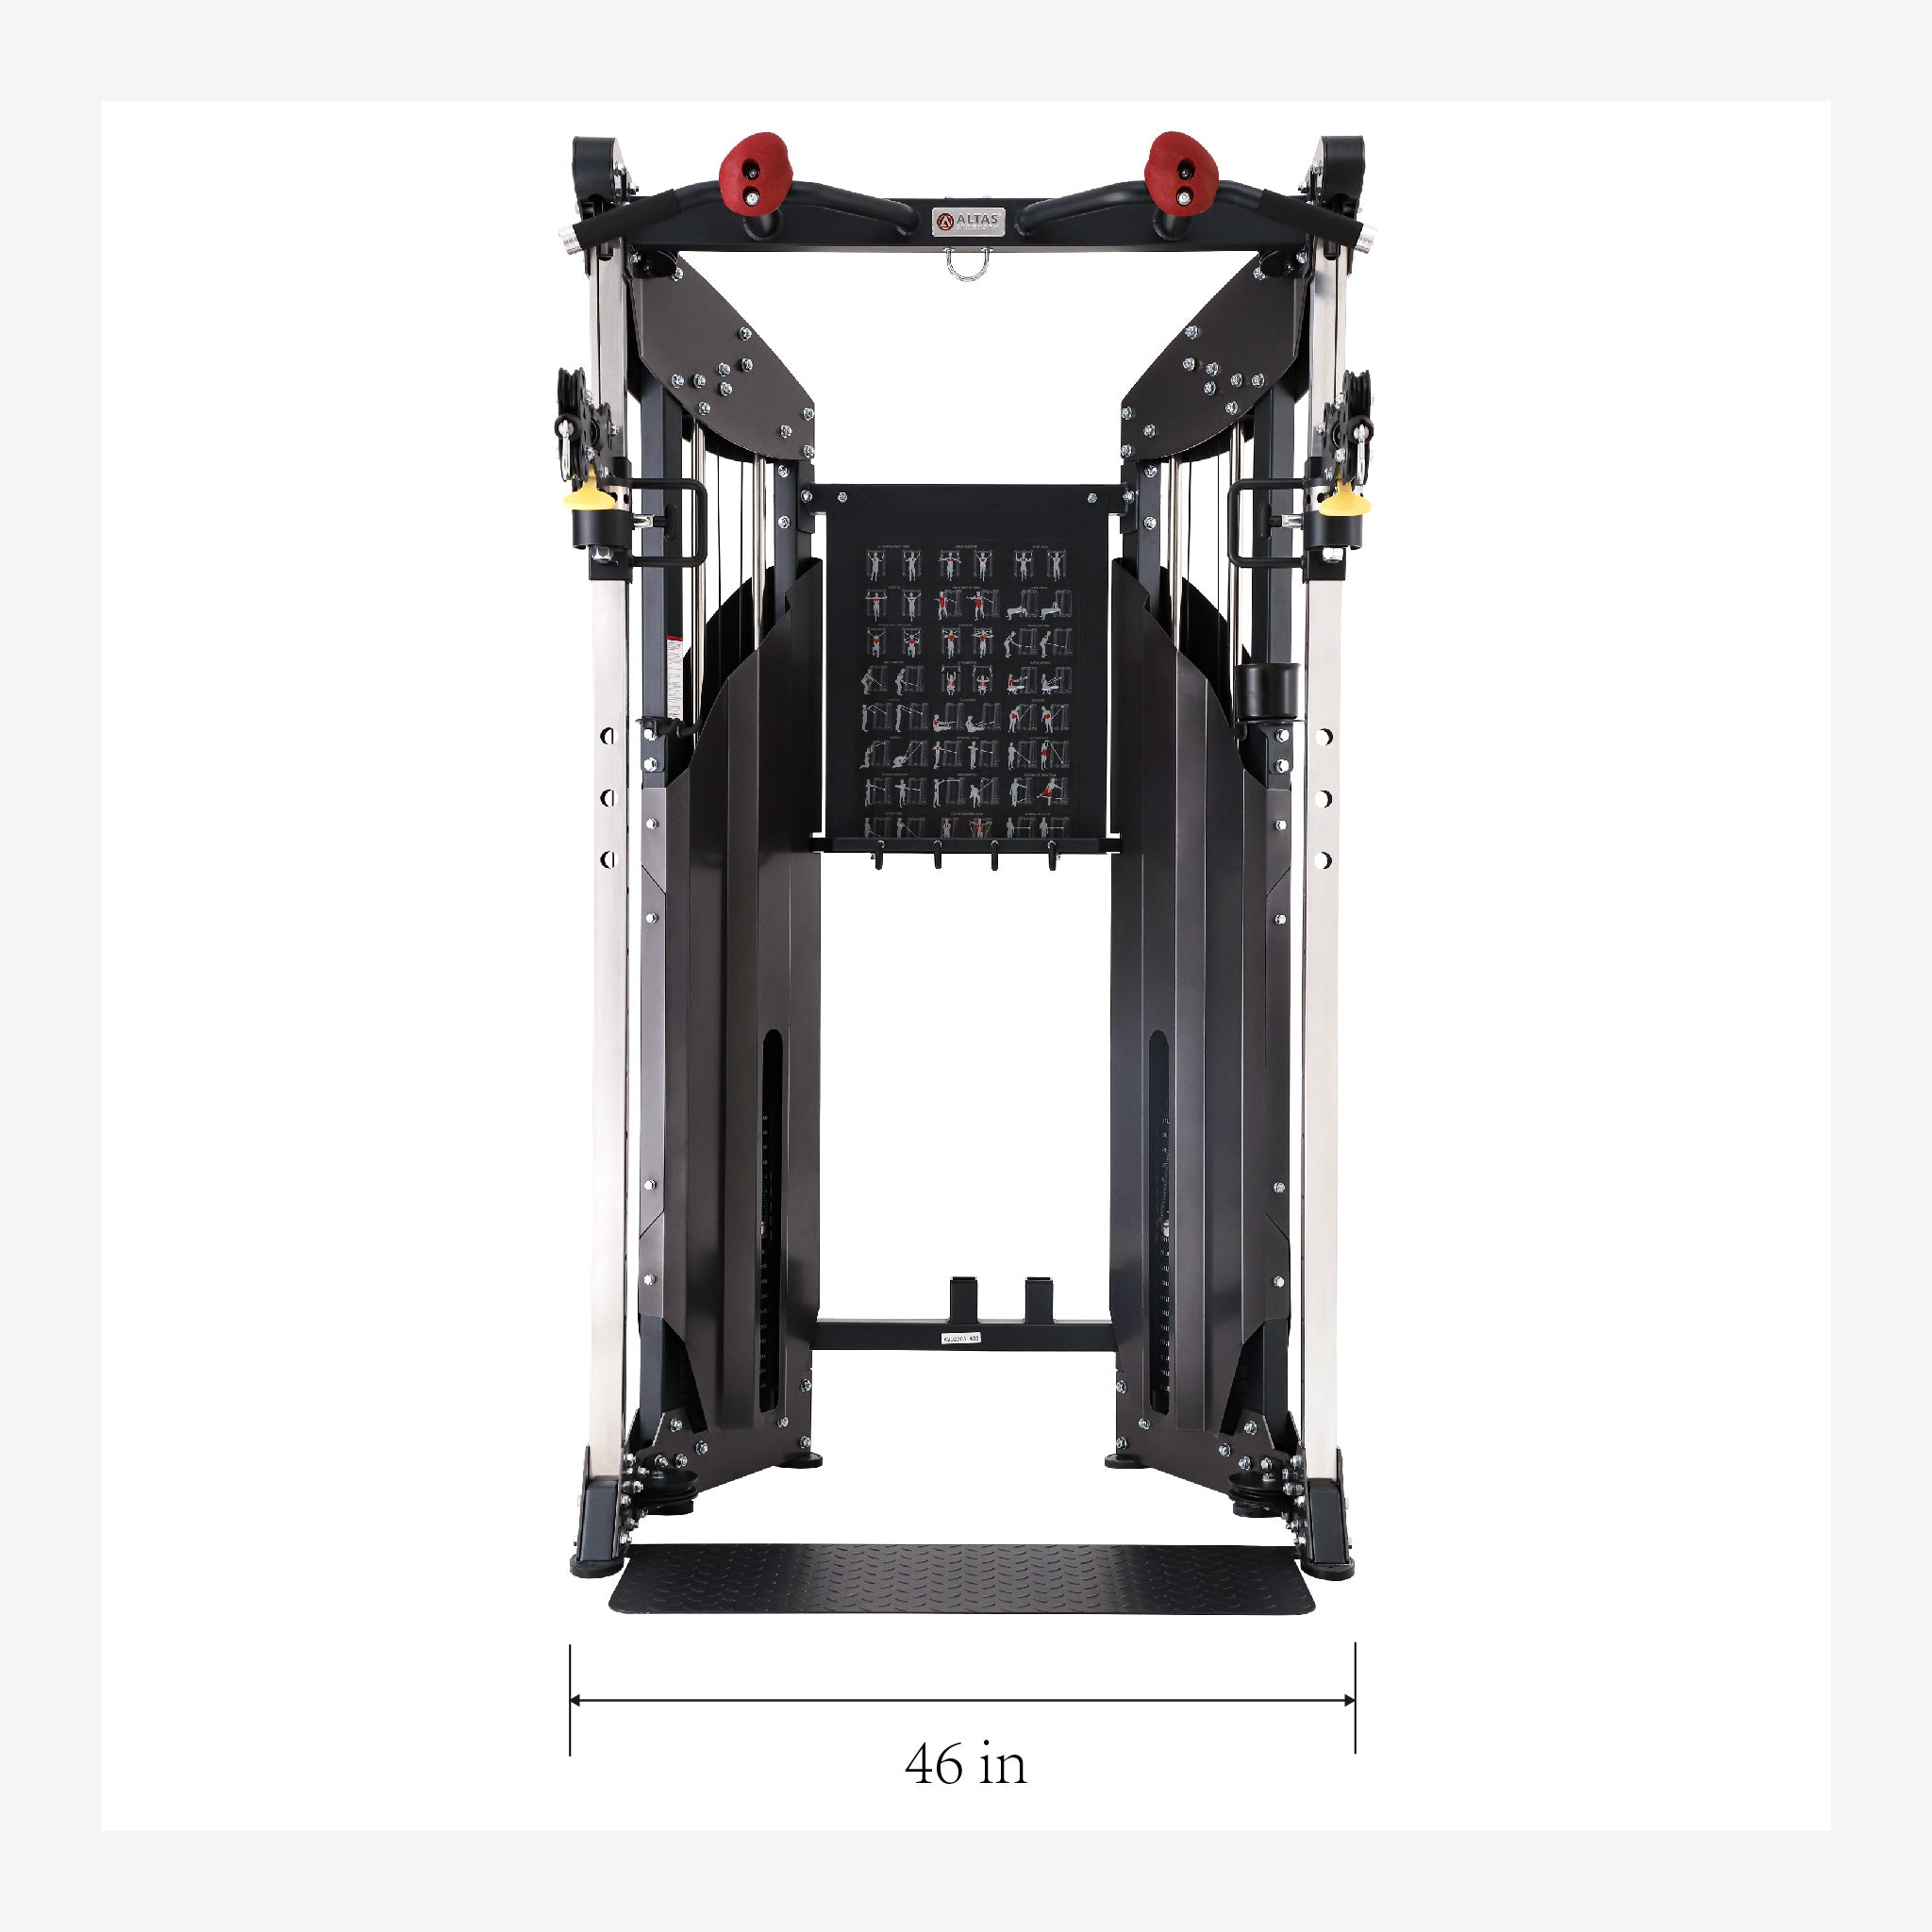 Altas Strength Multi Function Trainer Exercise Machine Black Workout Light Commercial Fitness Equipment AL-3075 (Pre-Order)